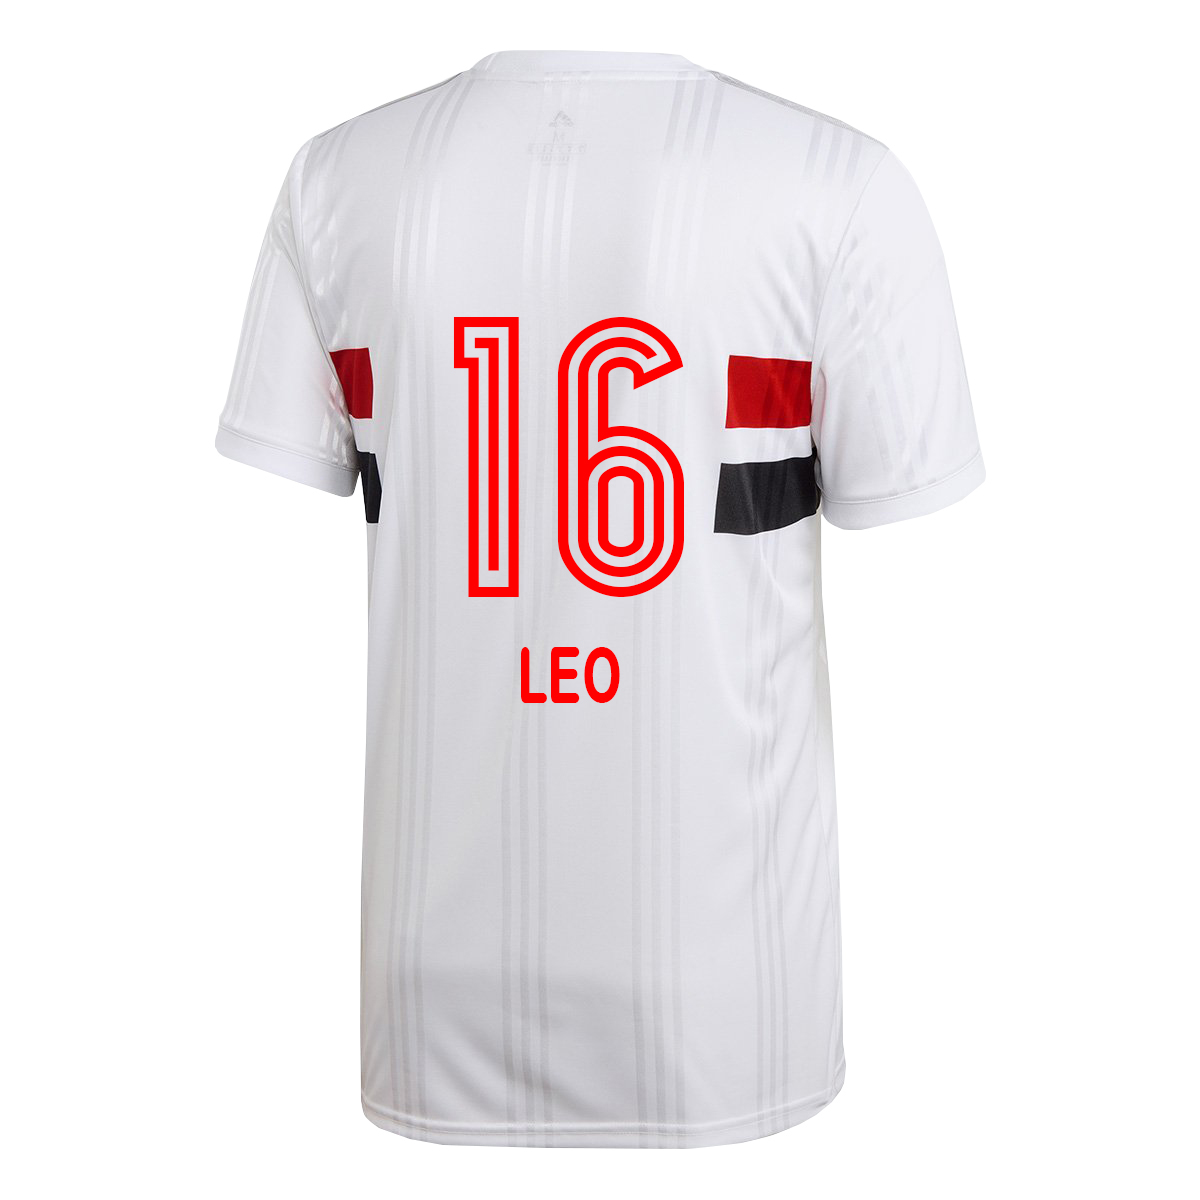 Herren Fußball Leo #16 Heimtrikot Weiß Trikot 2020/21 Hemd